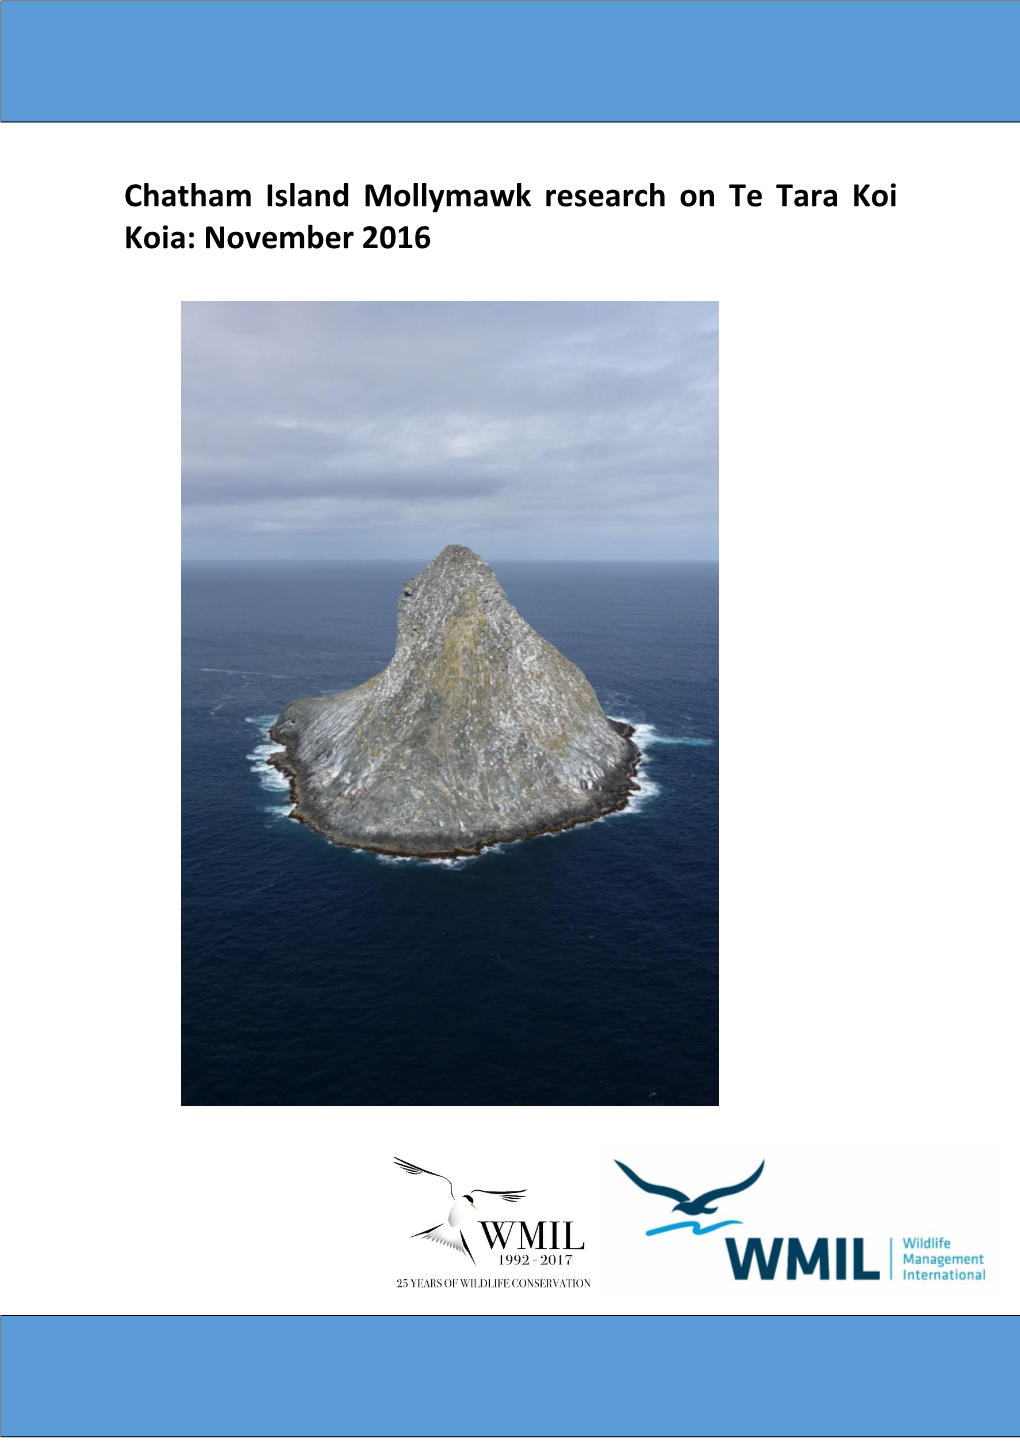 Chatham Island Mollymawk Research on Te Tara Koi Koia: November 2016